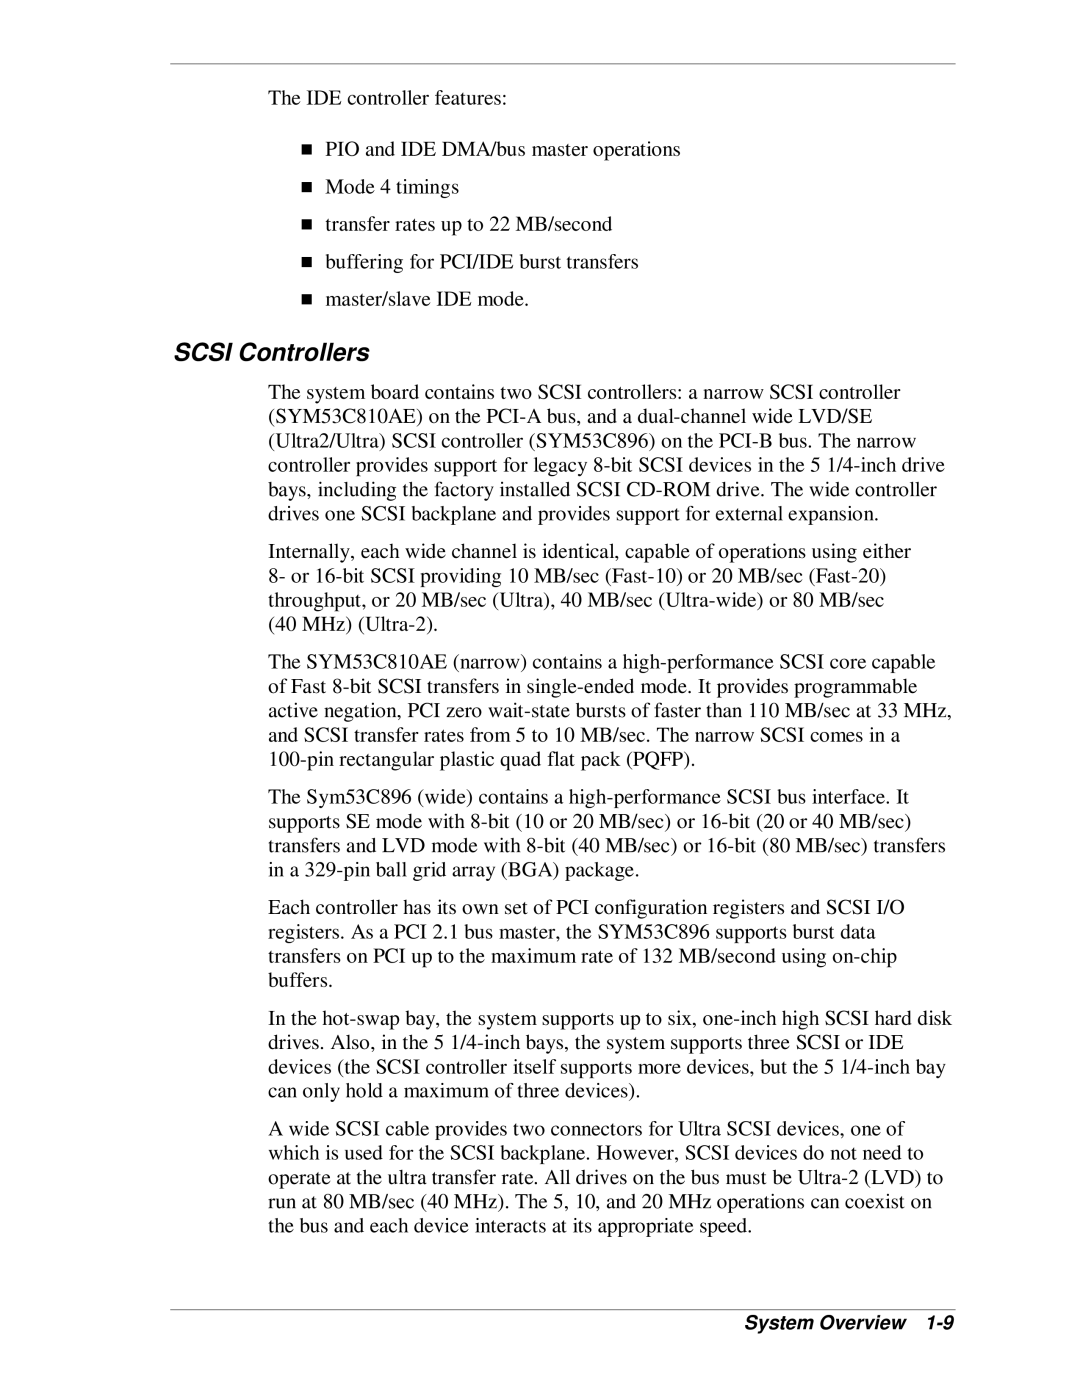 NEC MH4500 manual SCSI Controllers 